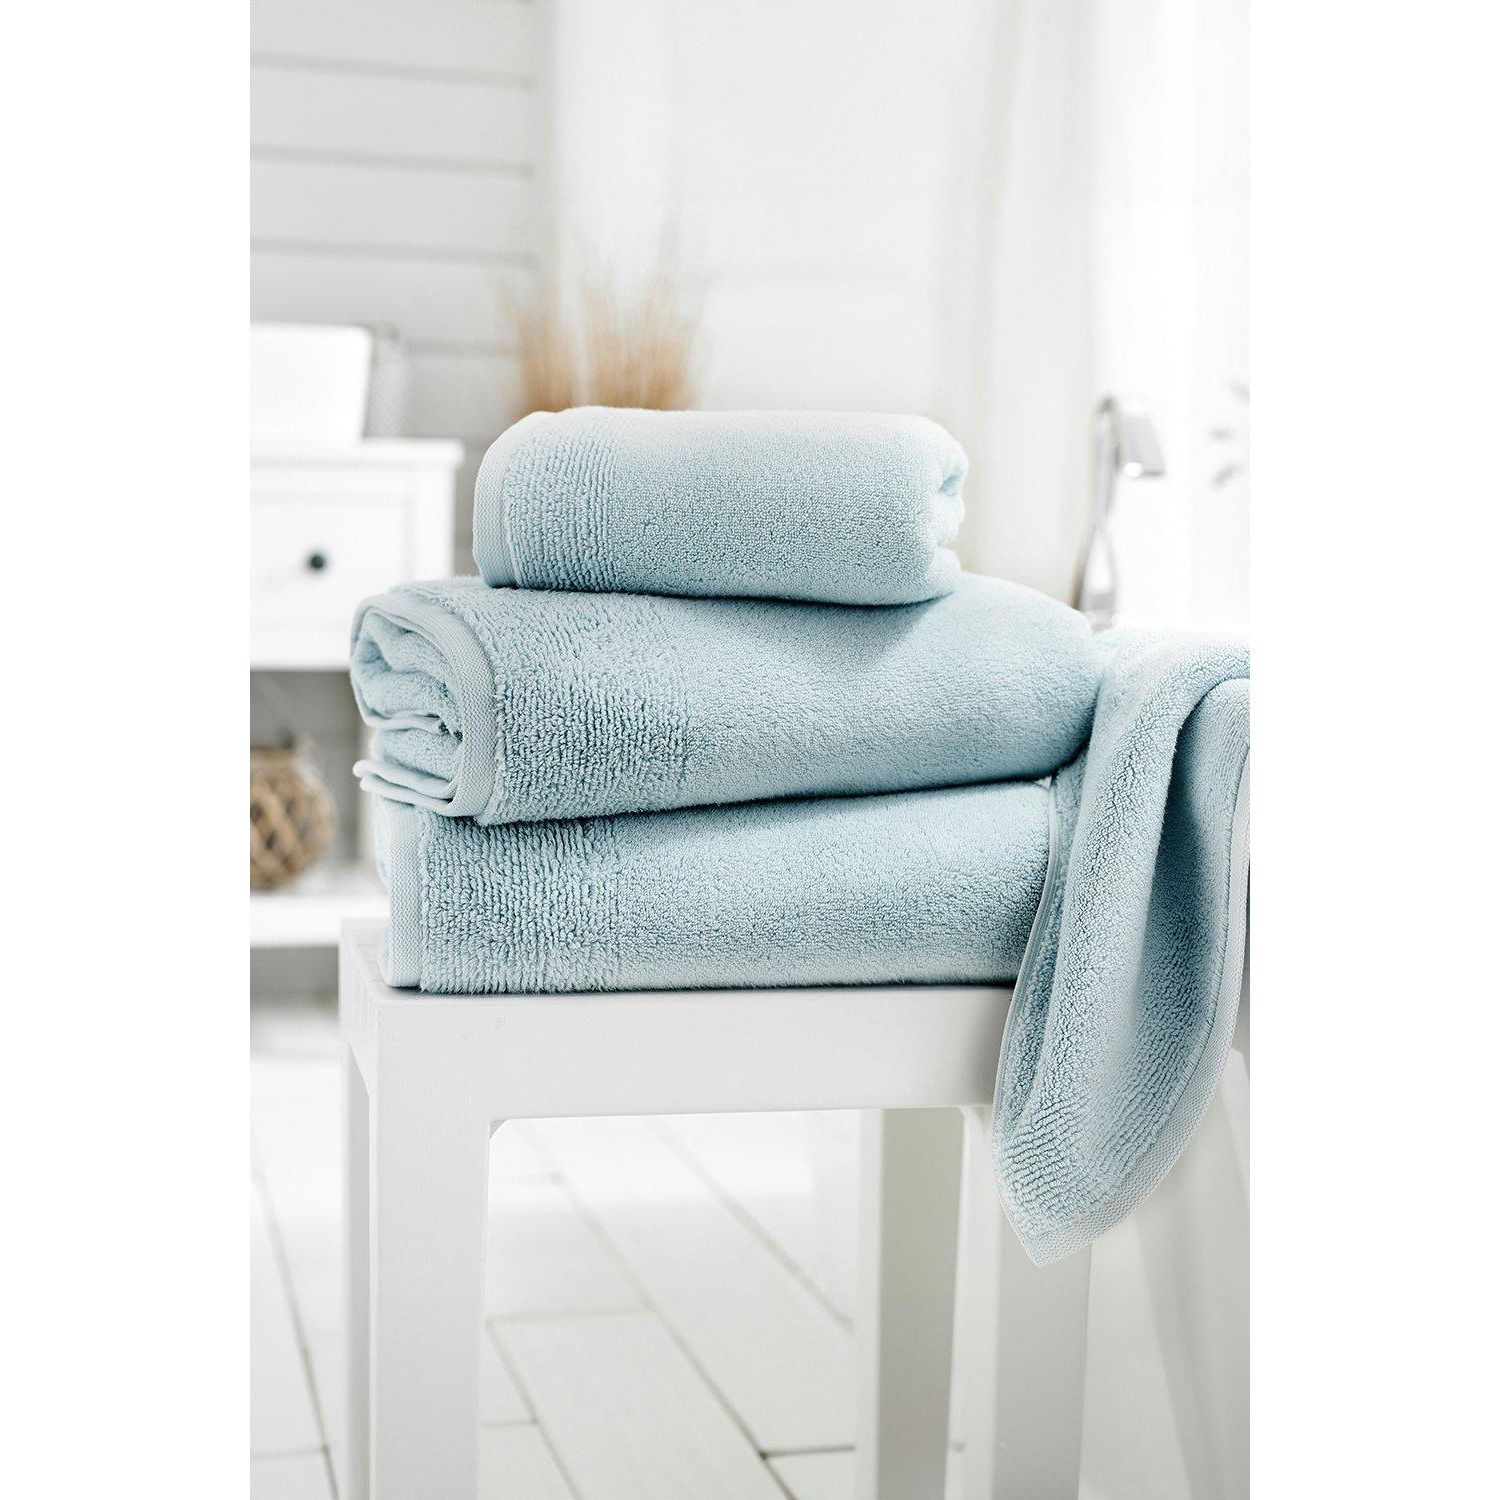 Palazzo Ultimate Plush Cotton Towels - image 1